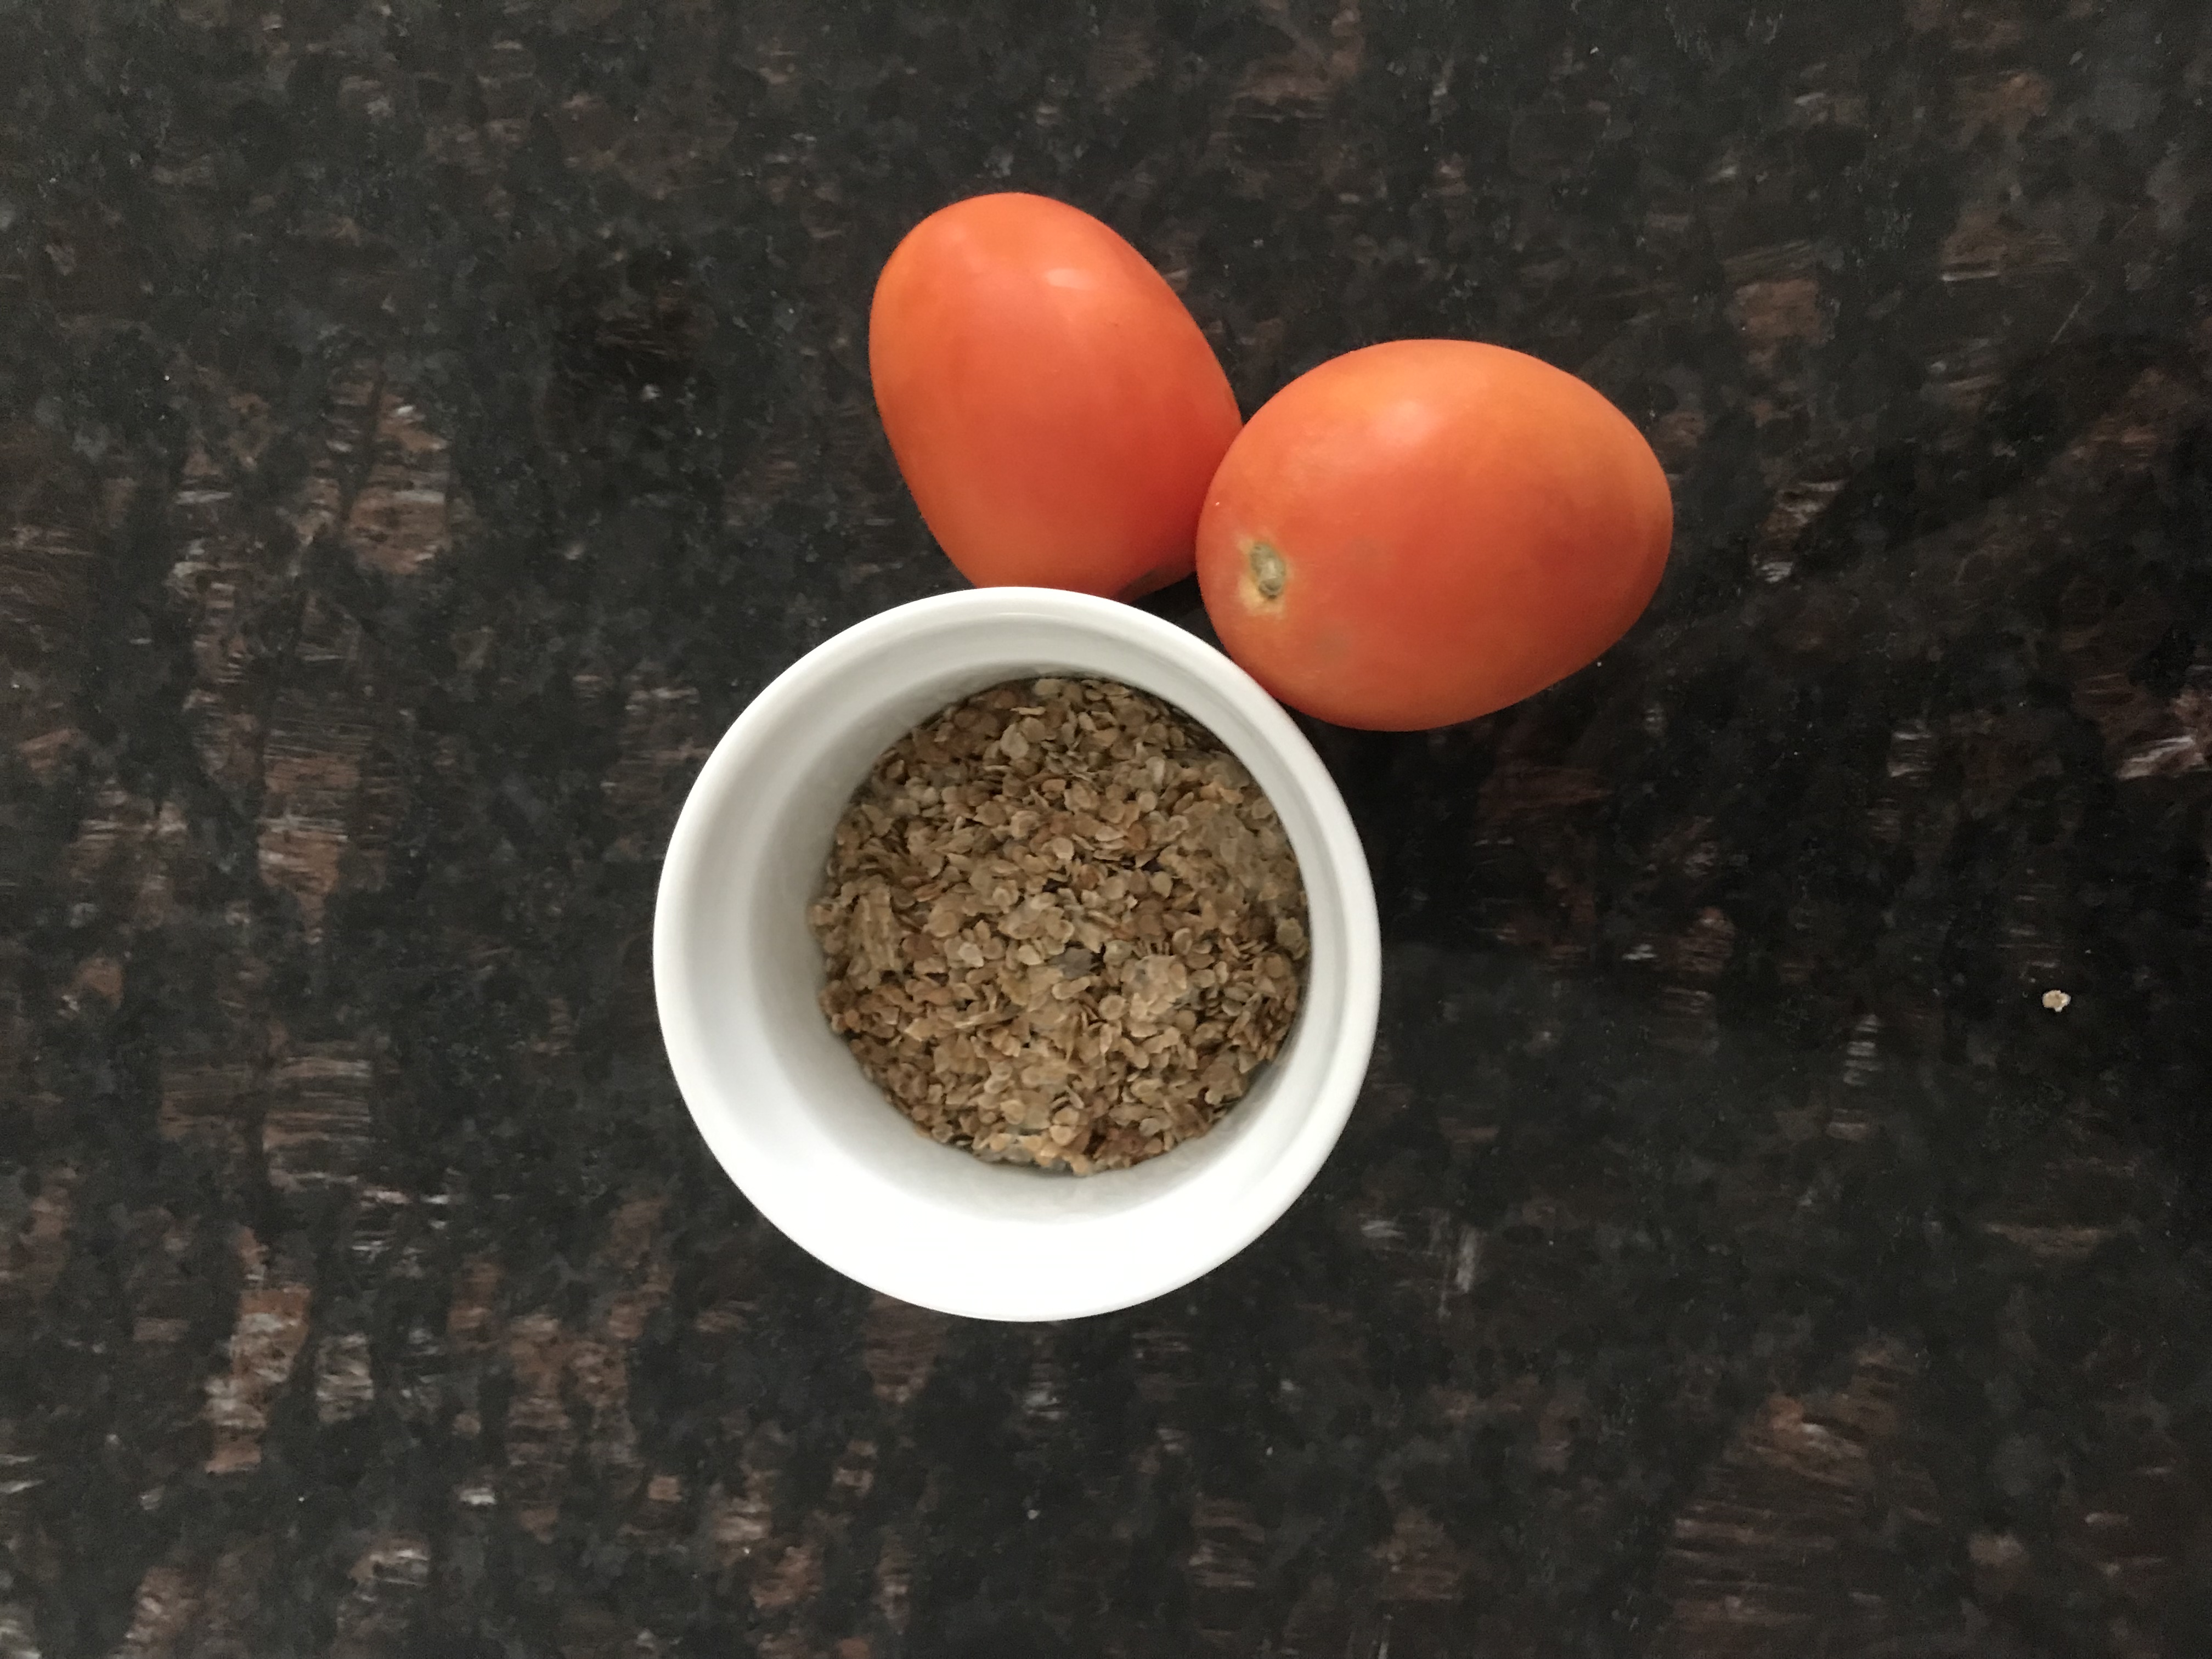 New     50 Roma Tomato Seeds